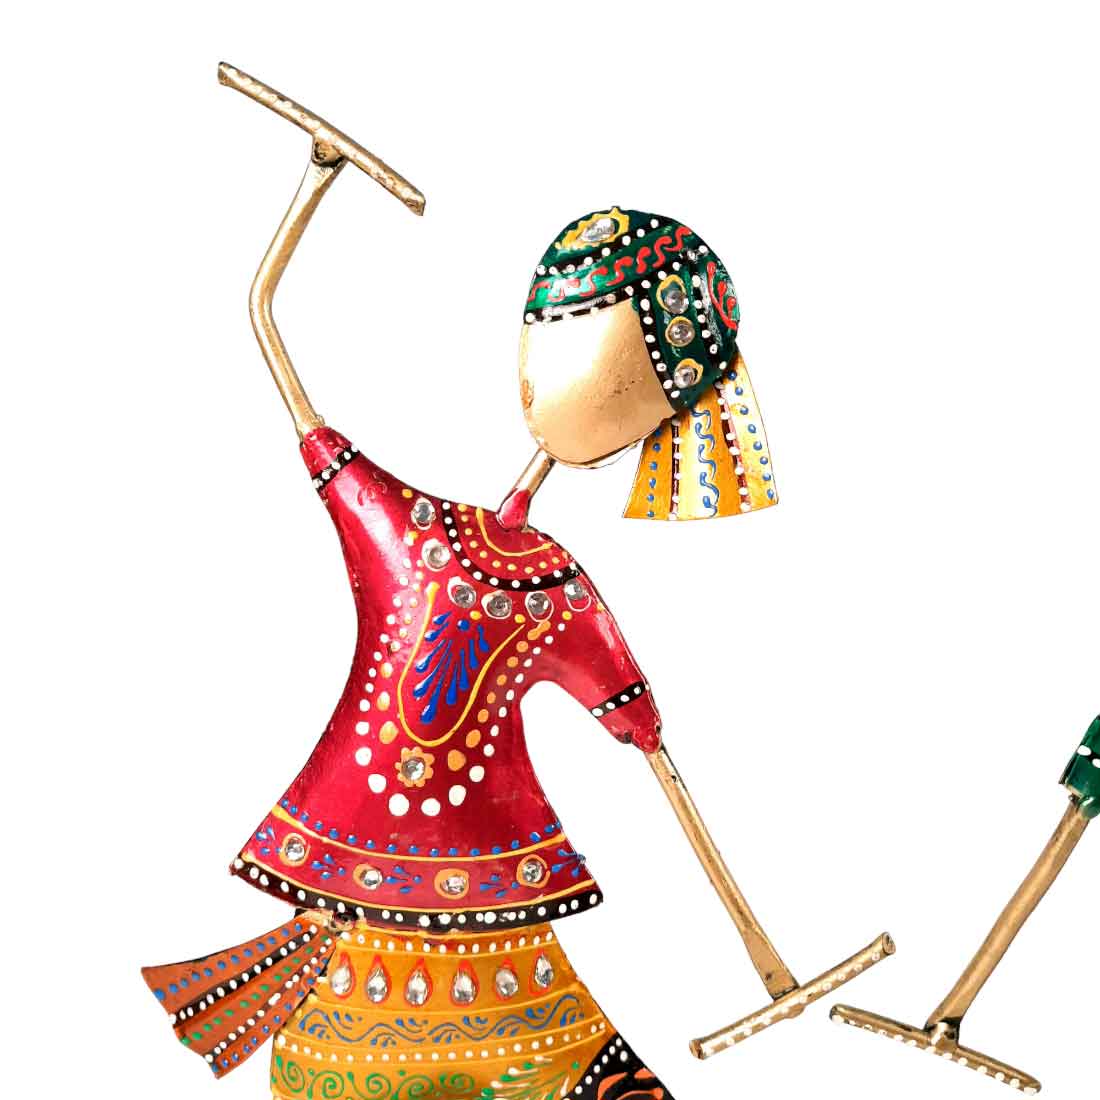 Dancing Couple Showpiece | Dandya Dancing Showpiece - for Table Decor and Gifts- 16 Inch - Apkamart